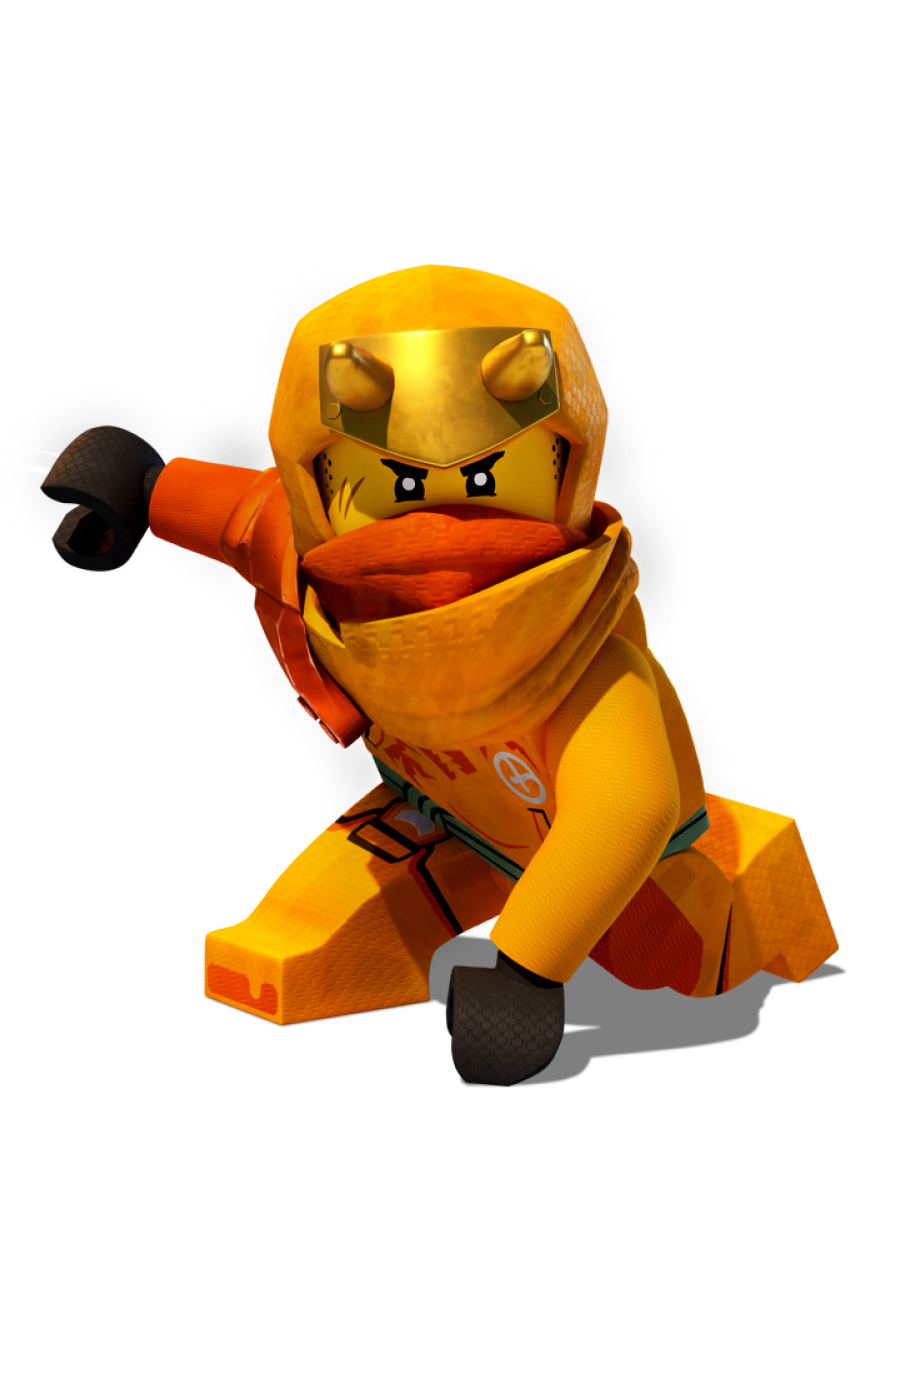 LEGO Ninjago: Dragons Risings Sets Officially Revealed - The Brick Fan